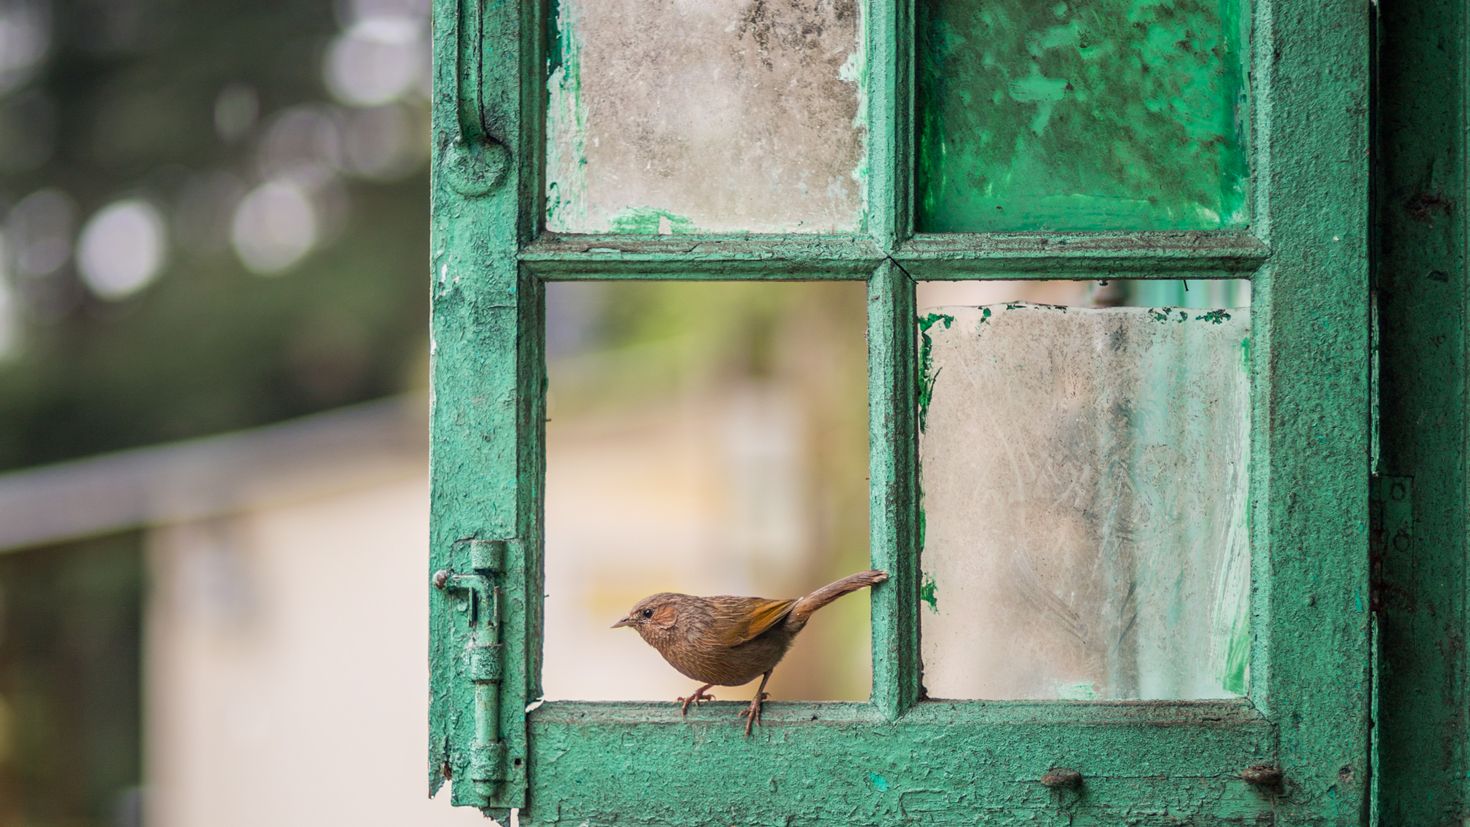 Птичка садится на окошко. Птицы за окном. Птичка на окошке. Птица на подоконнике. Птицы на окна.